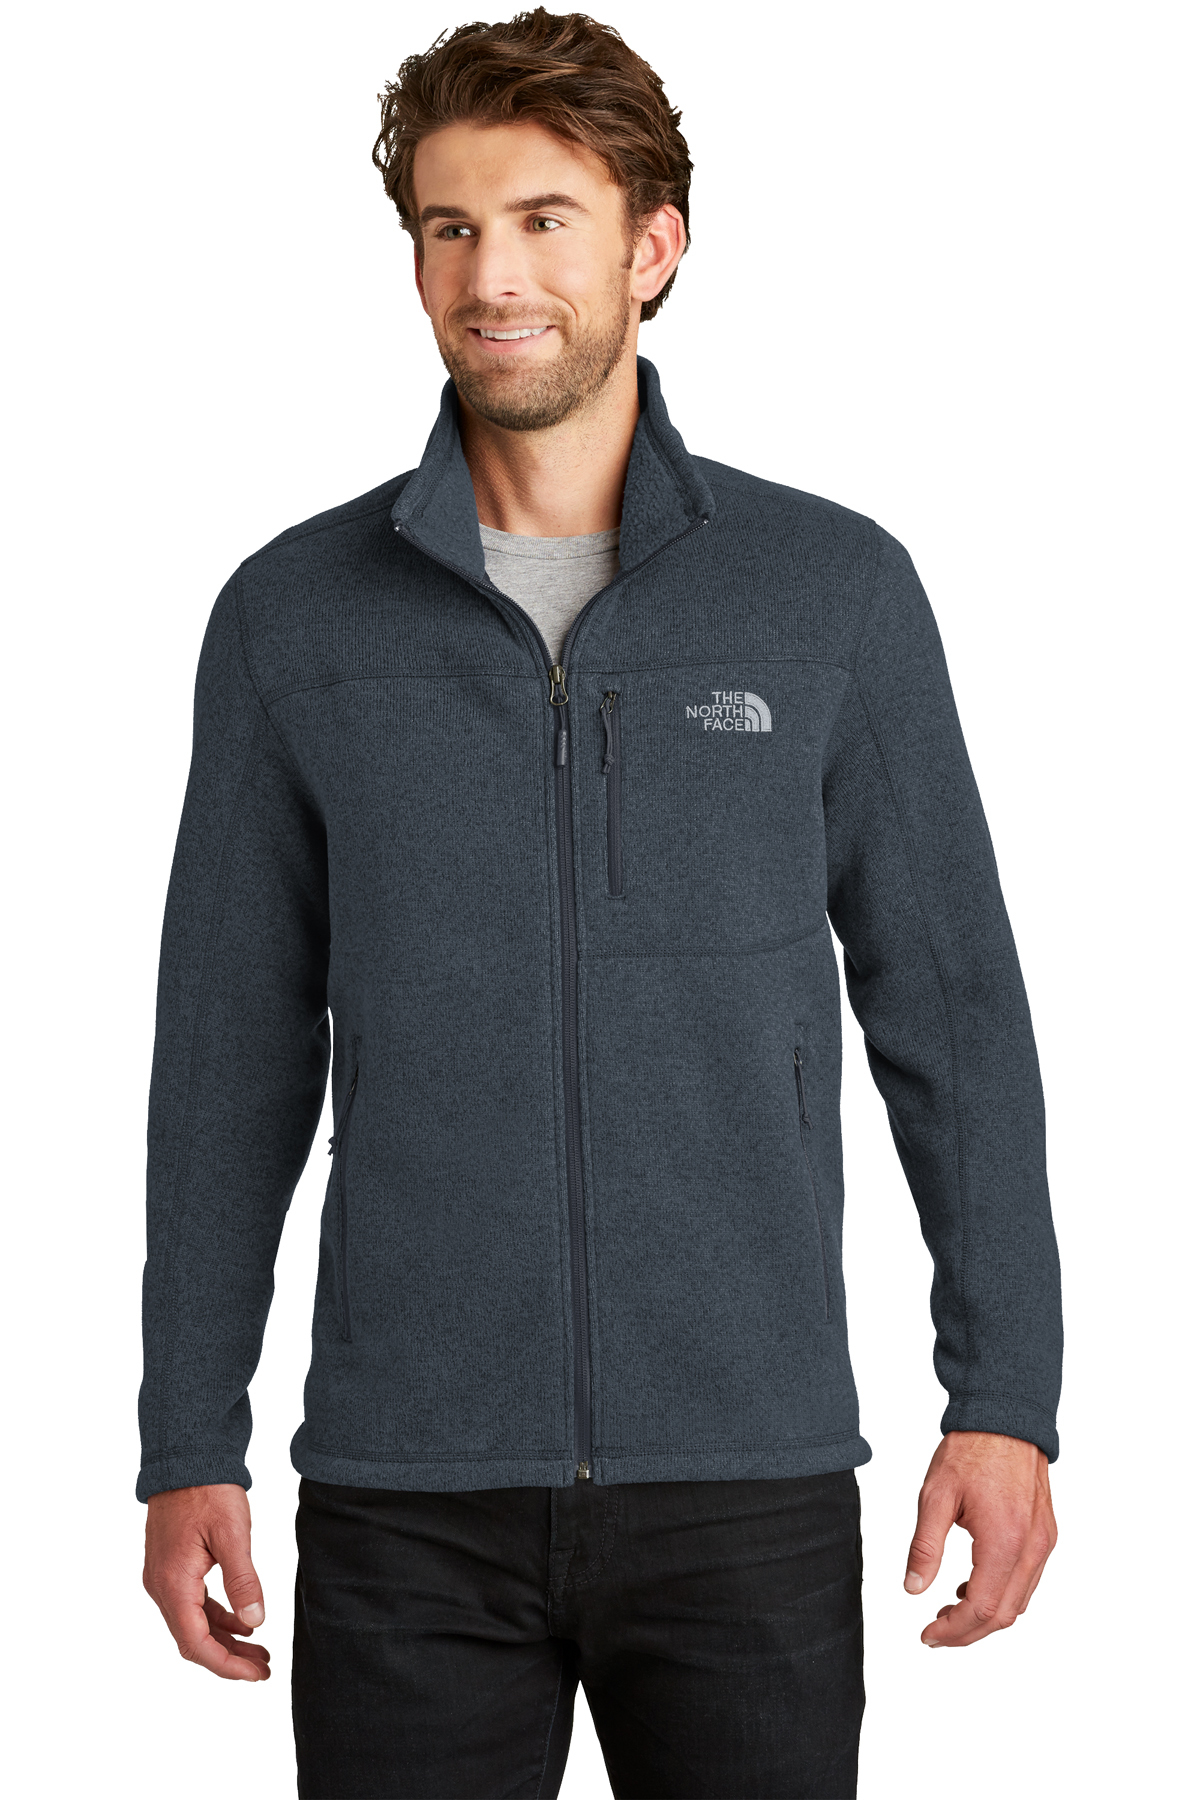 Automatisering Gehoorzaamheid astronaut The North Face Sweater Fleece Jacket | Product | Company Casuals